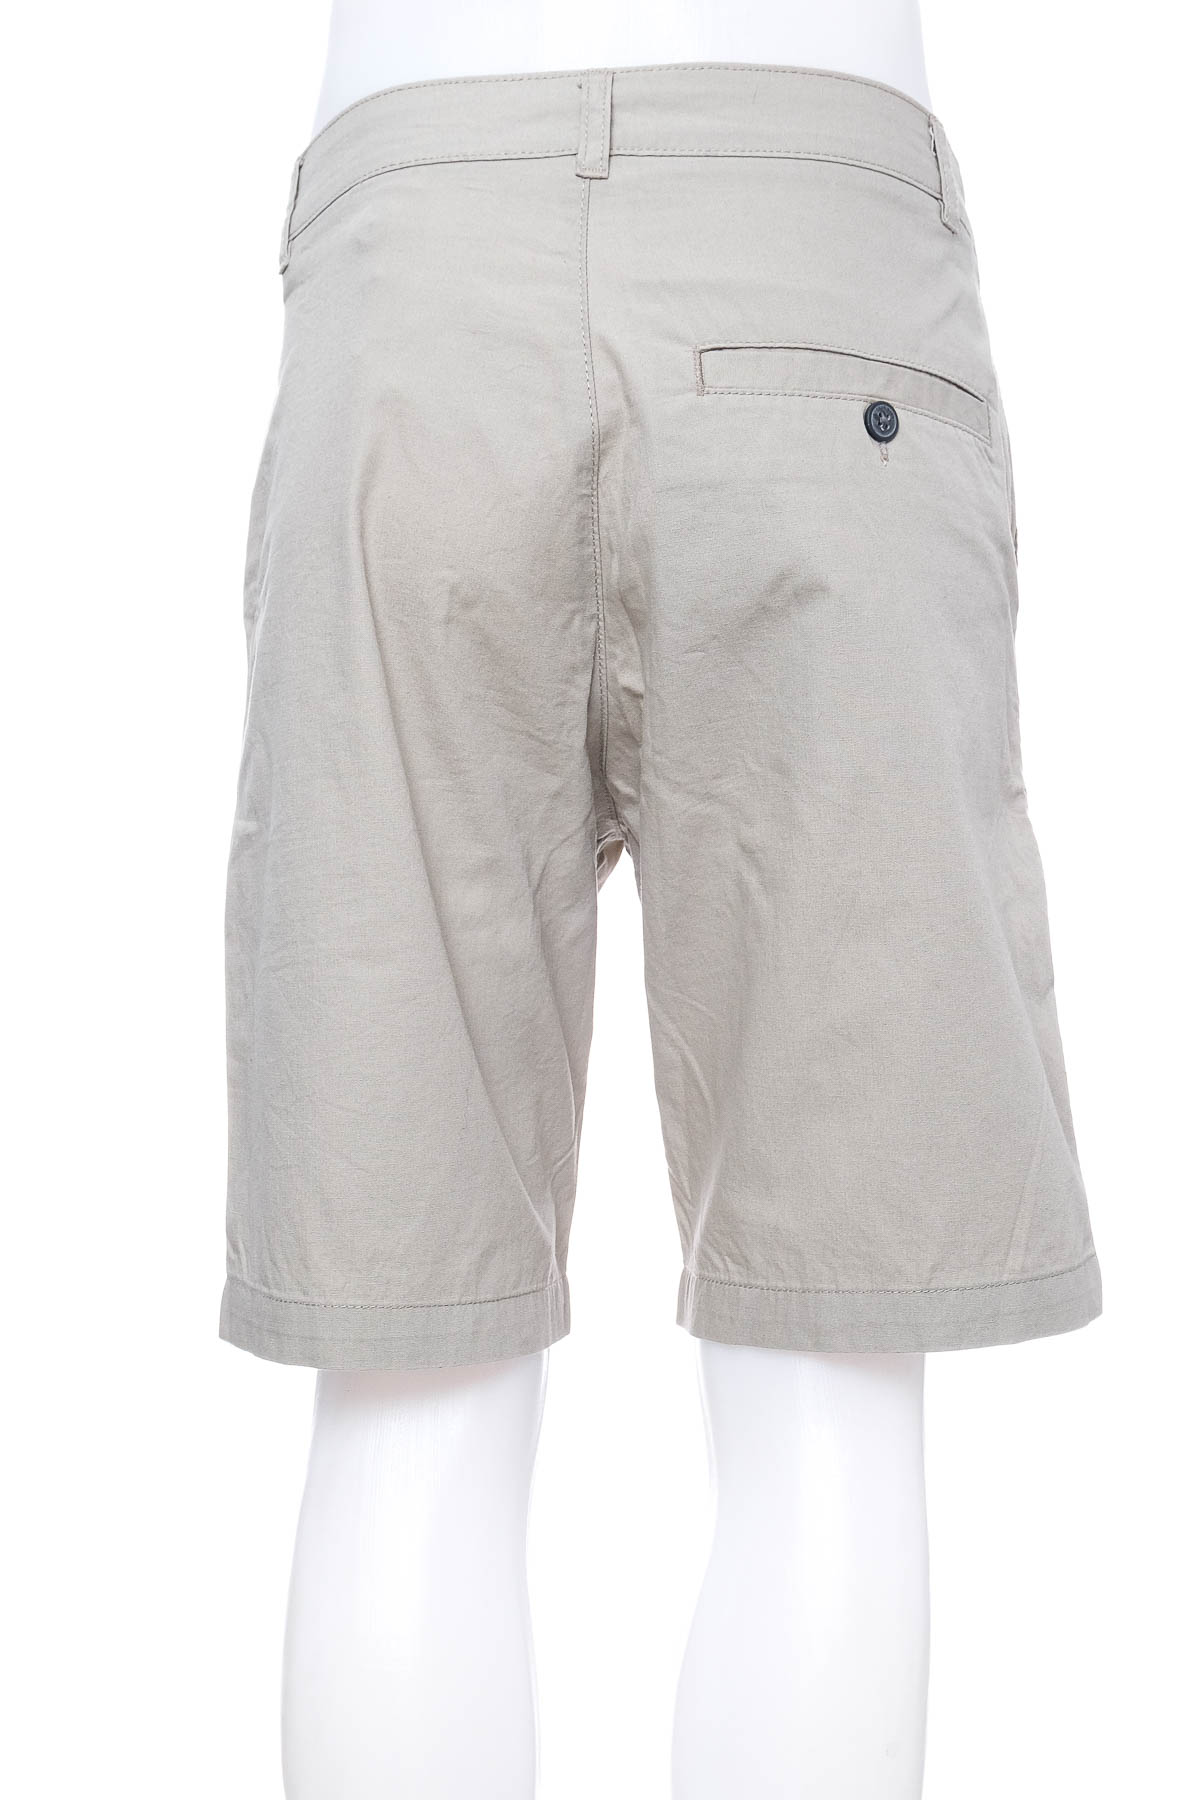 Men's shorts - DIVIDED - 1